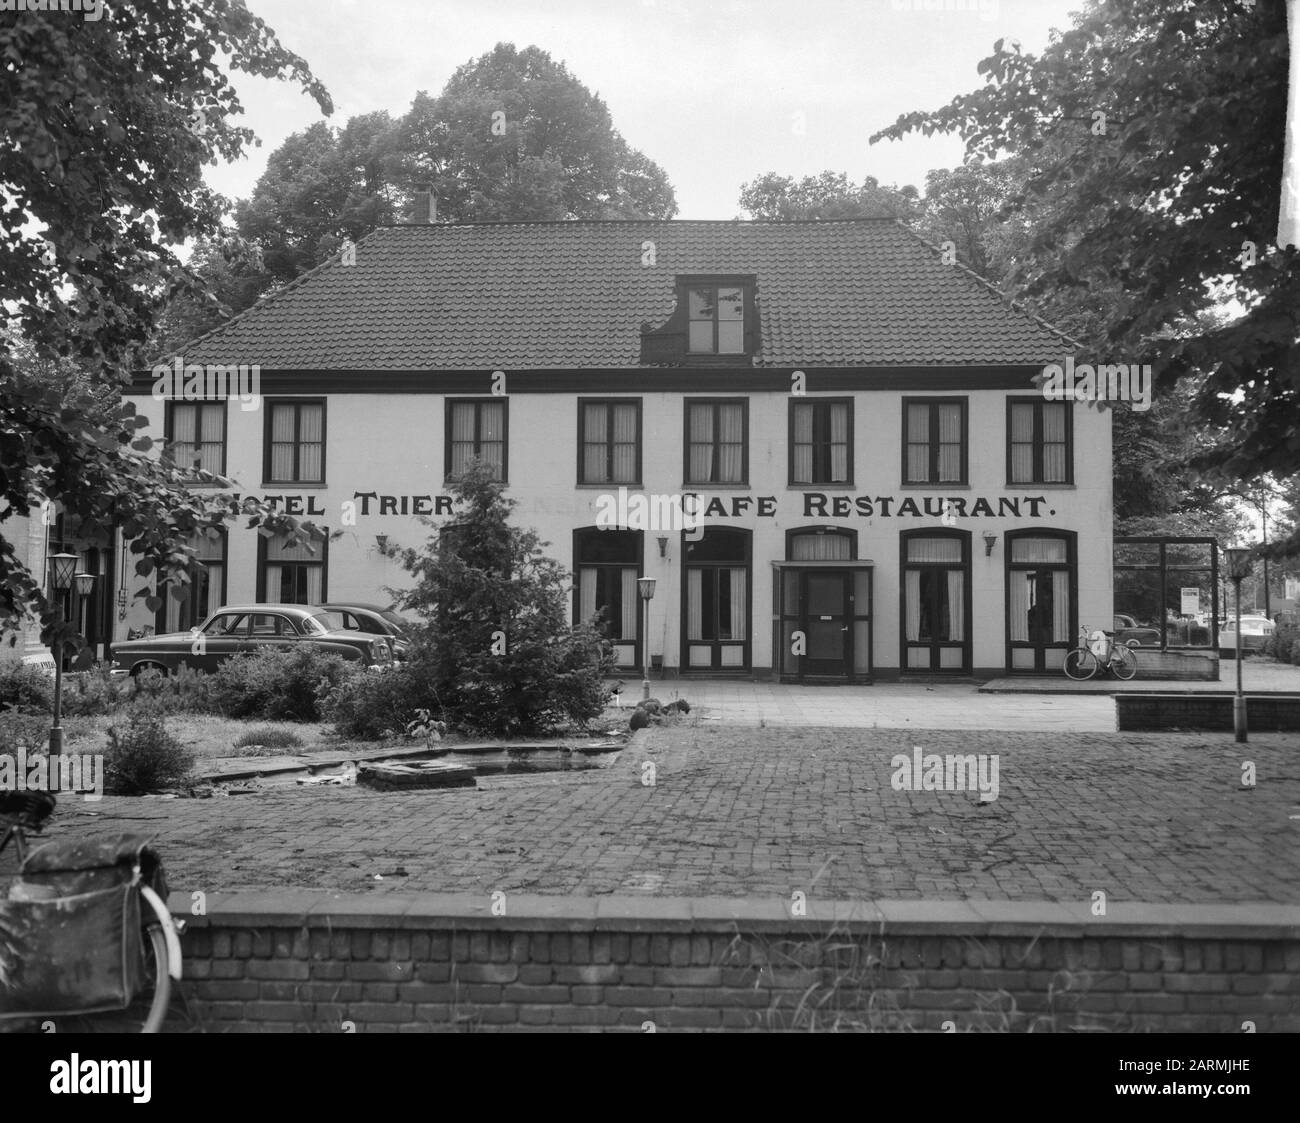 Hotel Trier in Soestdijk (auctioned) Date: June 26, 1961 Location: Soestdijk, Utrecht Institution name: Trier Hotel Stock Photo